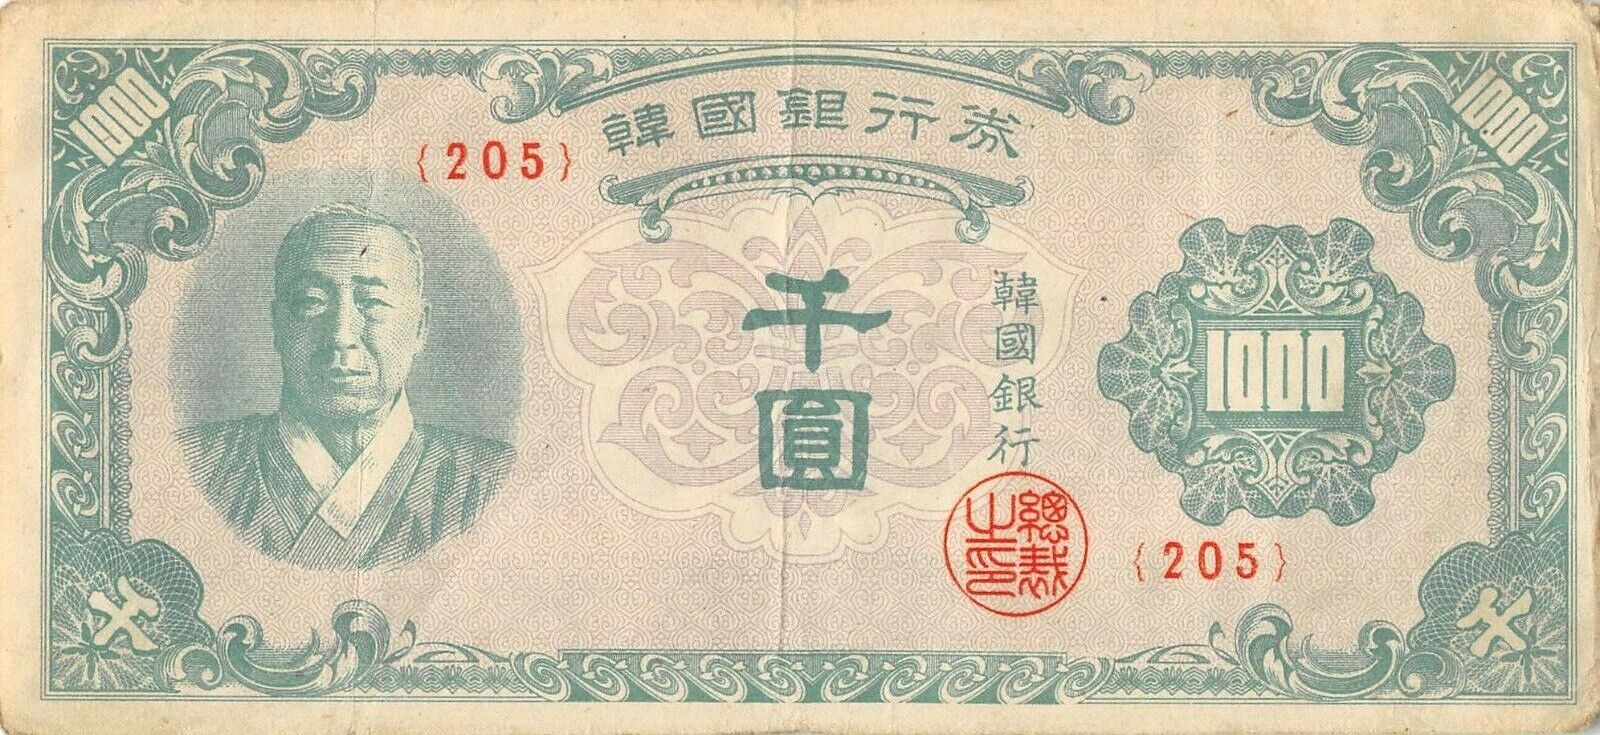 Korea S.  1000  Won  Nd. 1950  P 8  Block { 205 }  Circulated Banknote Nam